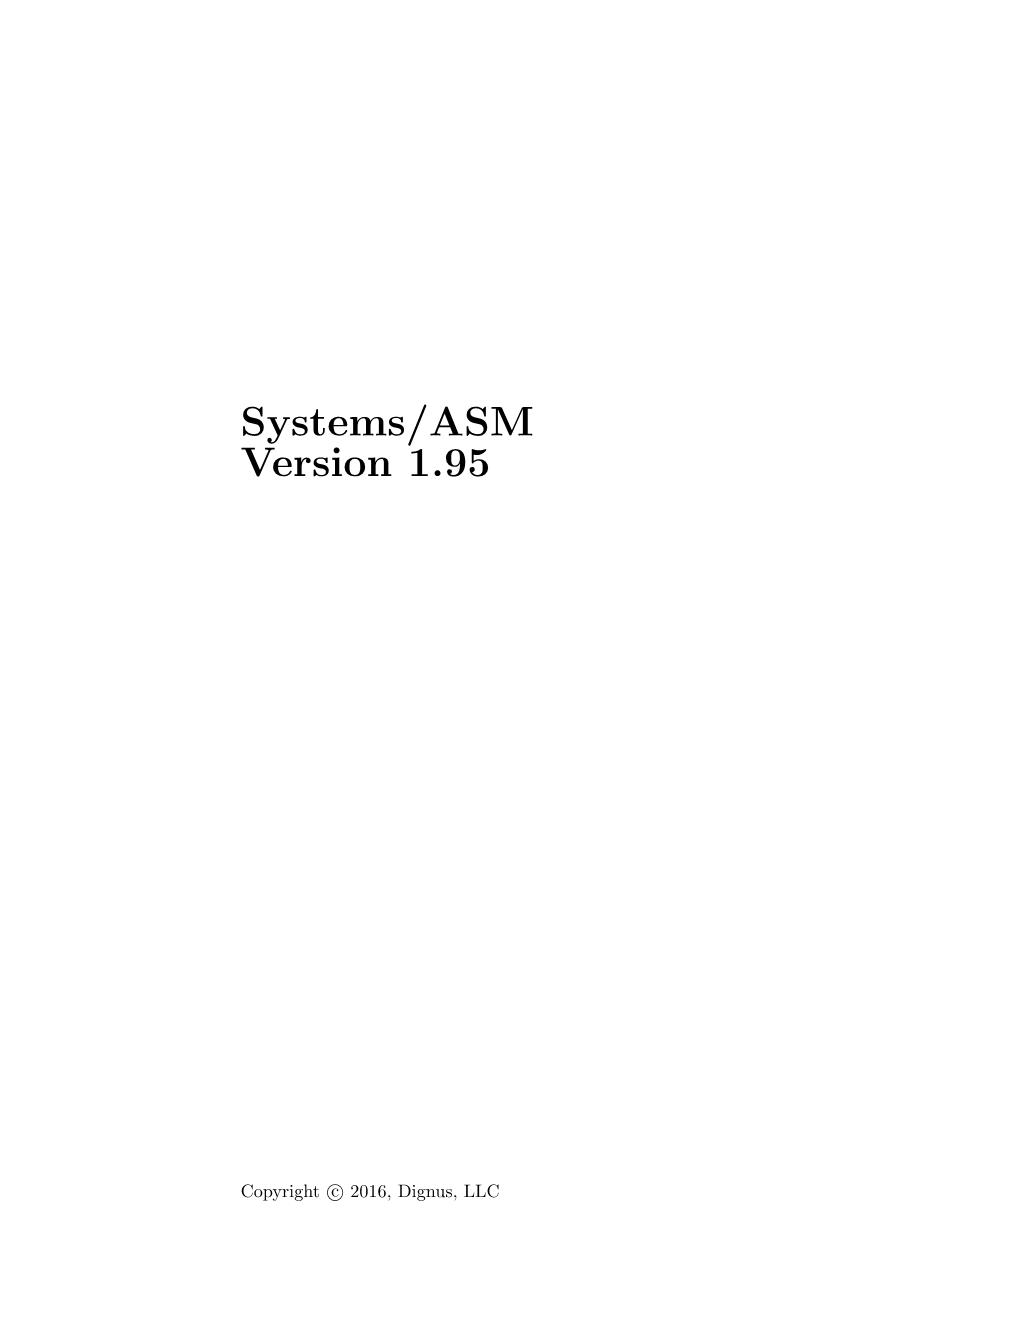 Systems/ASM Version 1.95